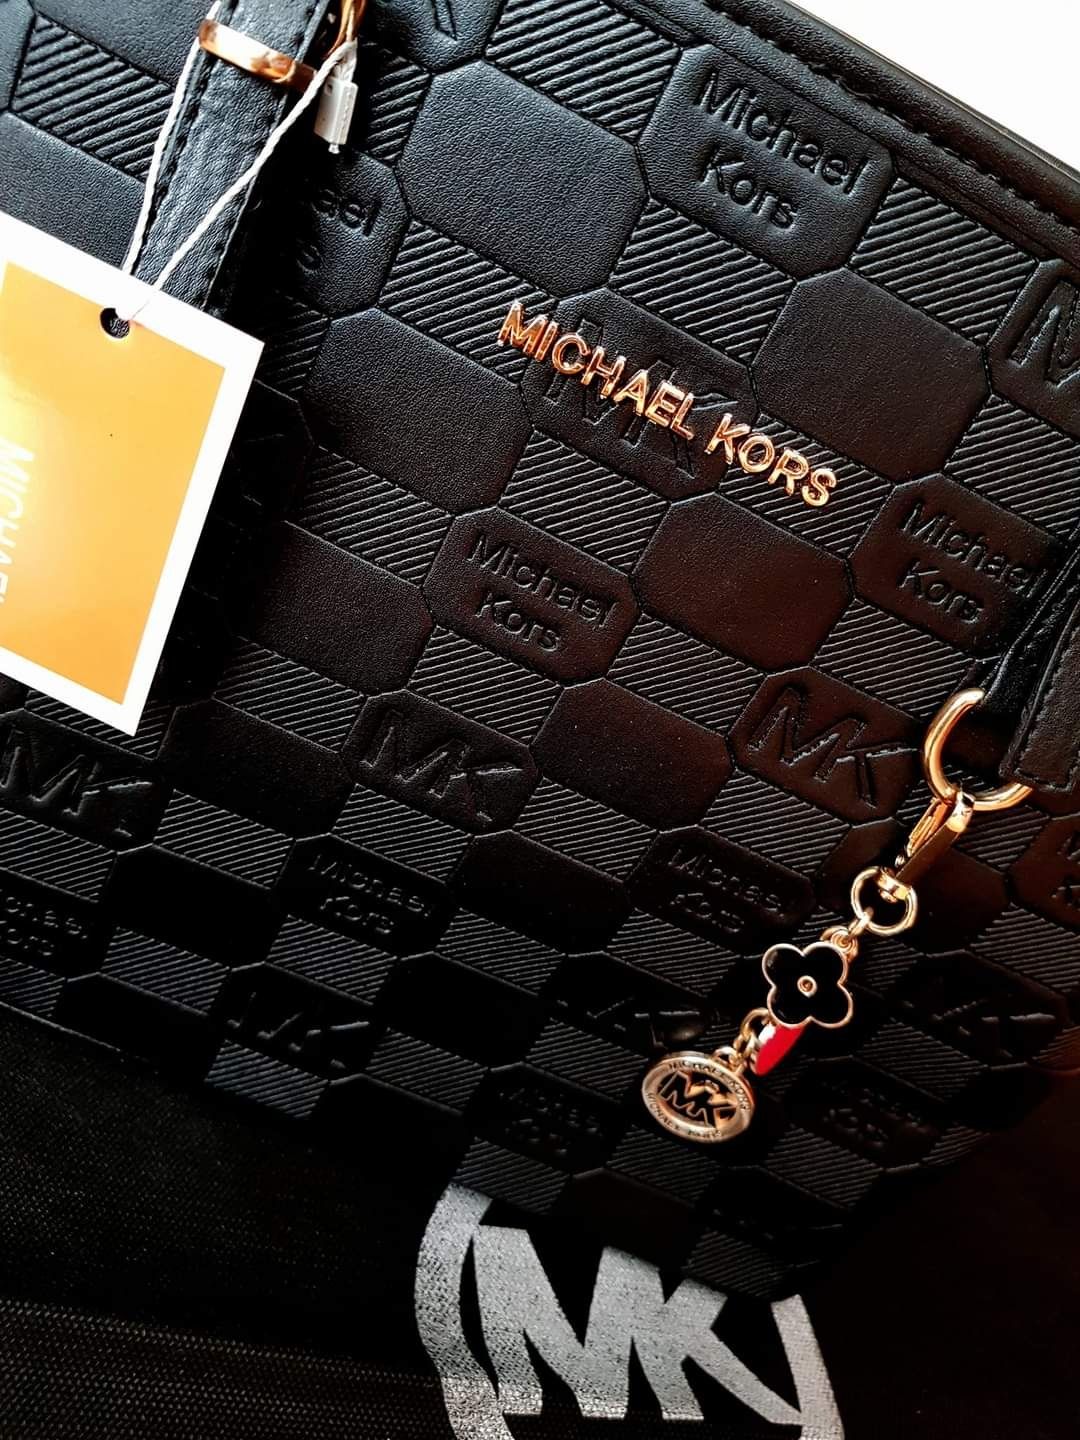 Geantă  Michael Kors new model import Italia logo metalic auriu,sacule